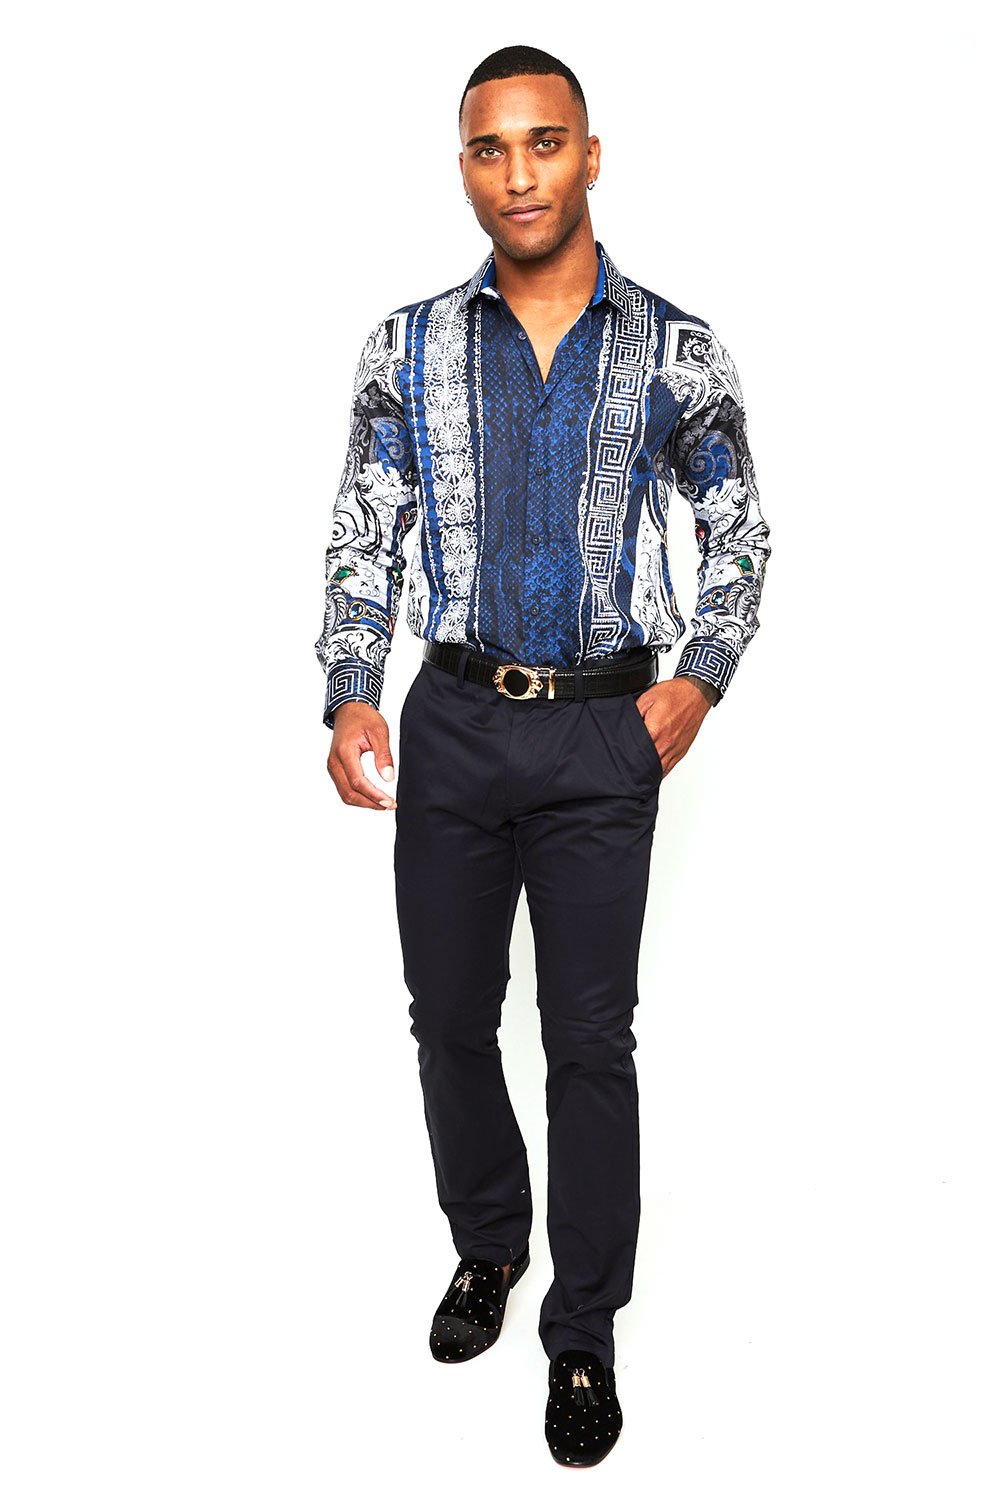 BARABAS Men's Blue Snake Printed Rhinestone Long Sleeve Shirts SPR962